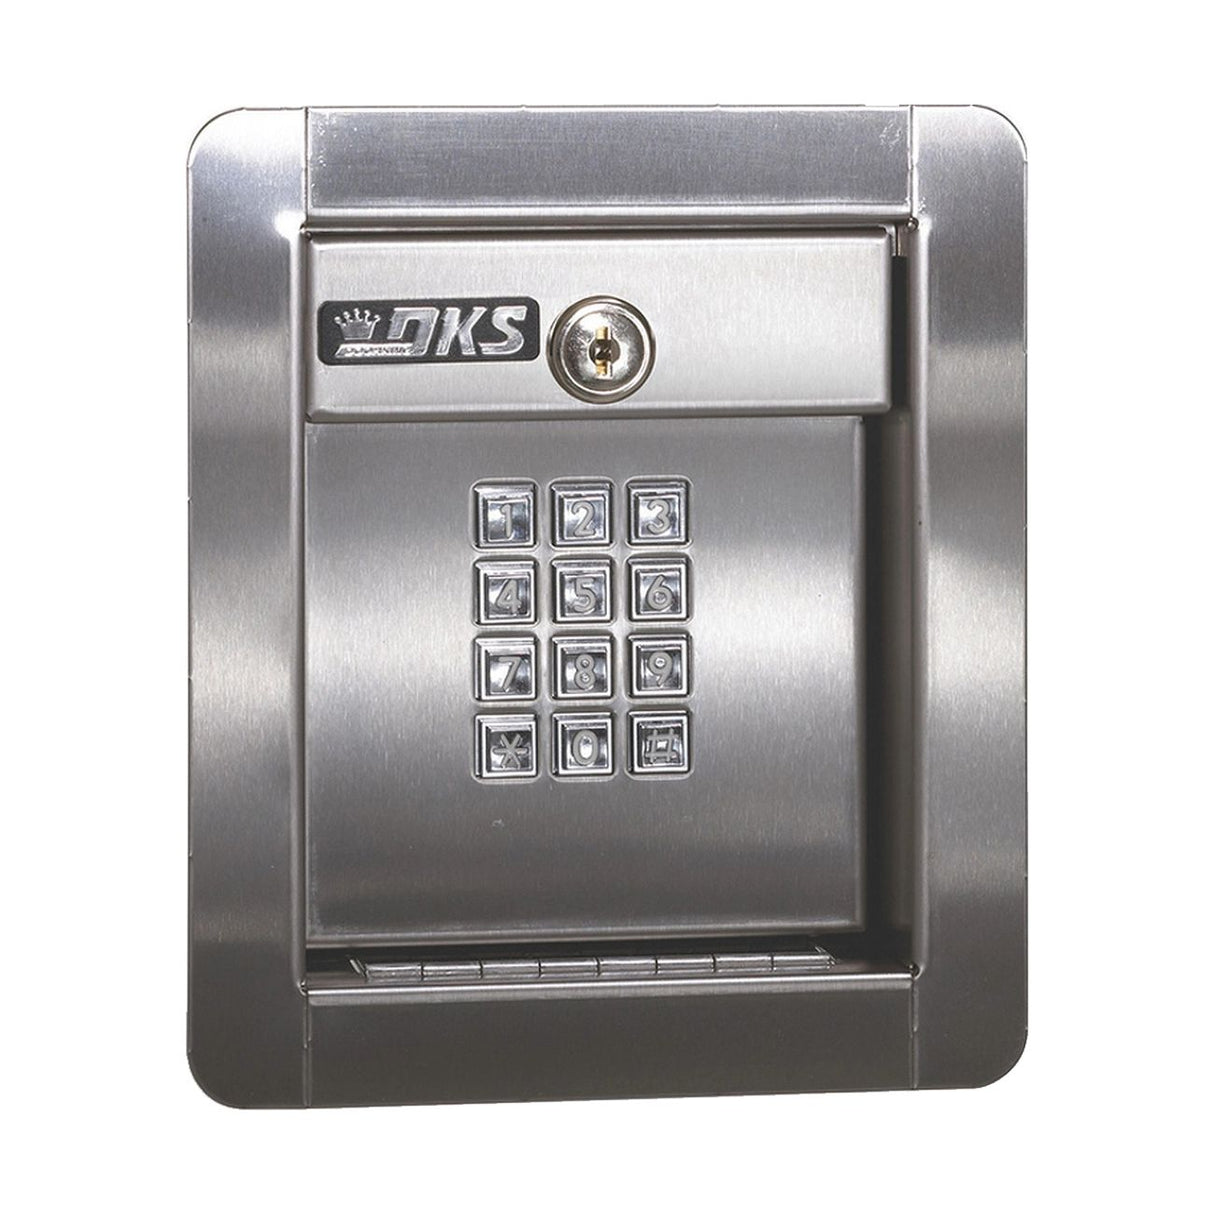 Doorking 1506-090 Keypad Flush Mount